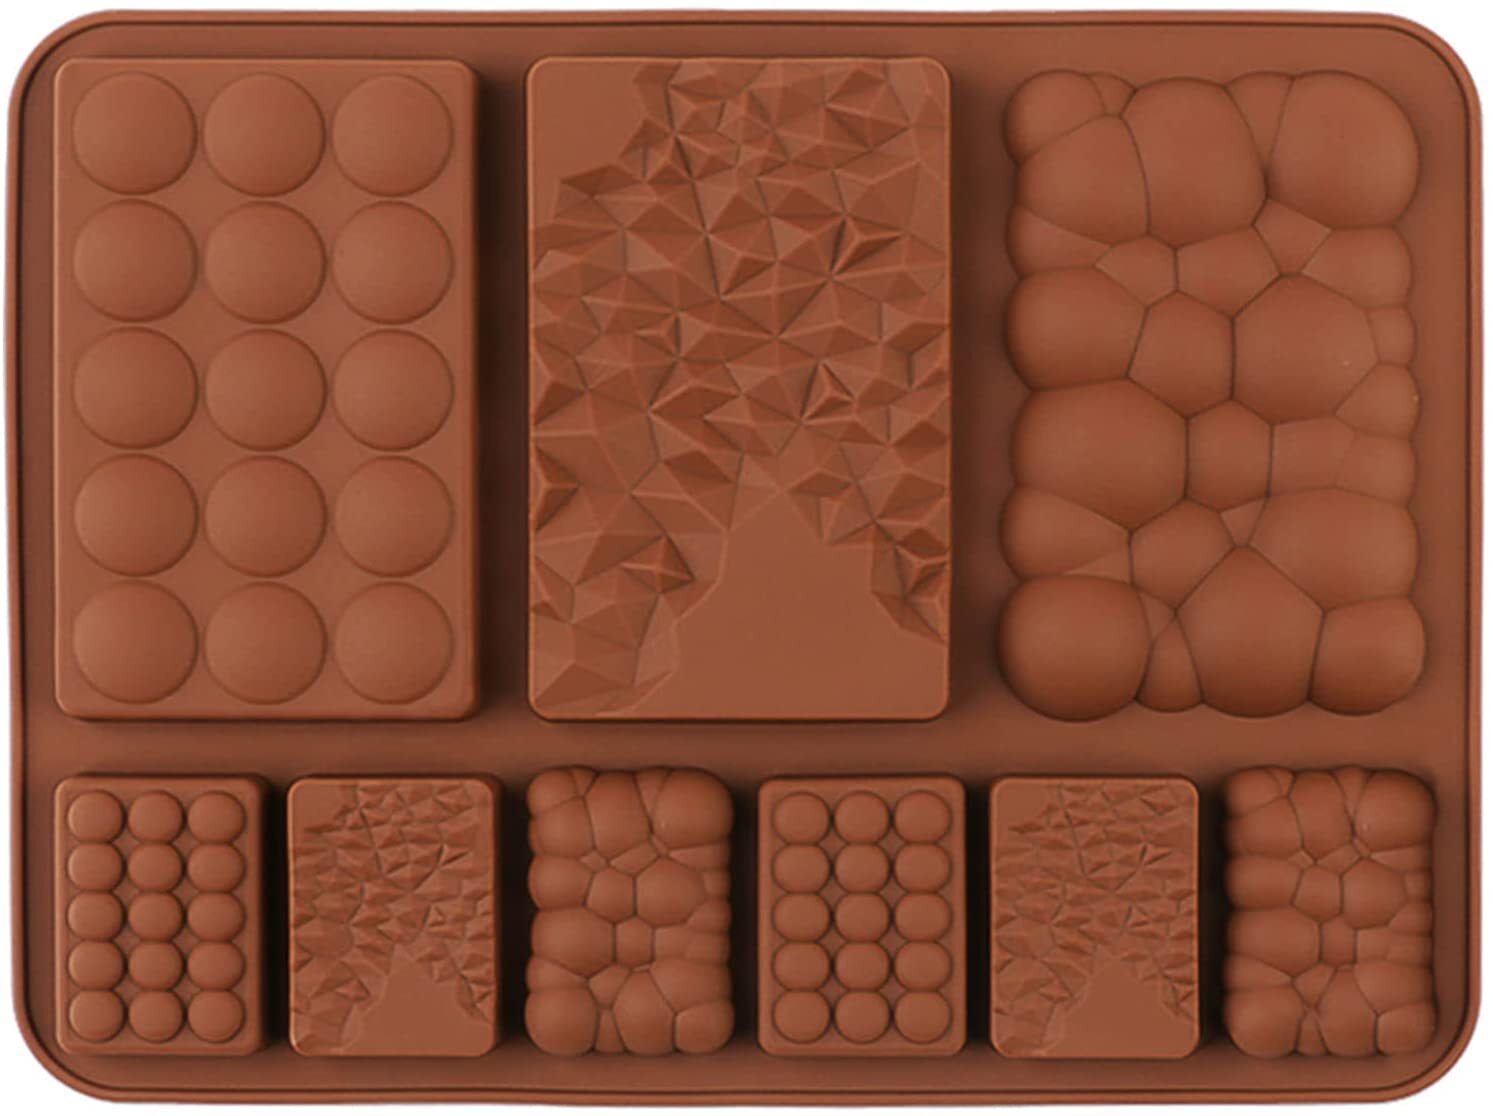 SPECOOL Silicone Chocolate Mould Break-Apart Chocolate Mold Non